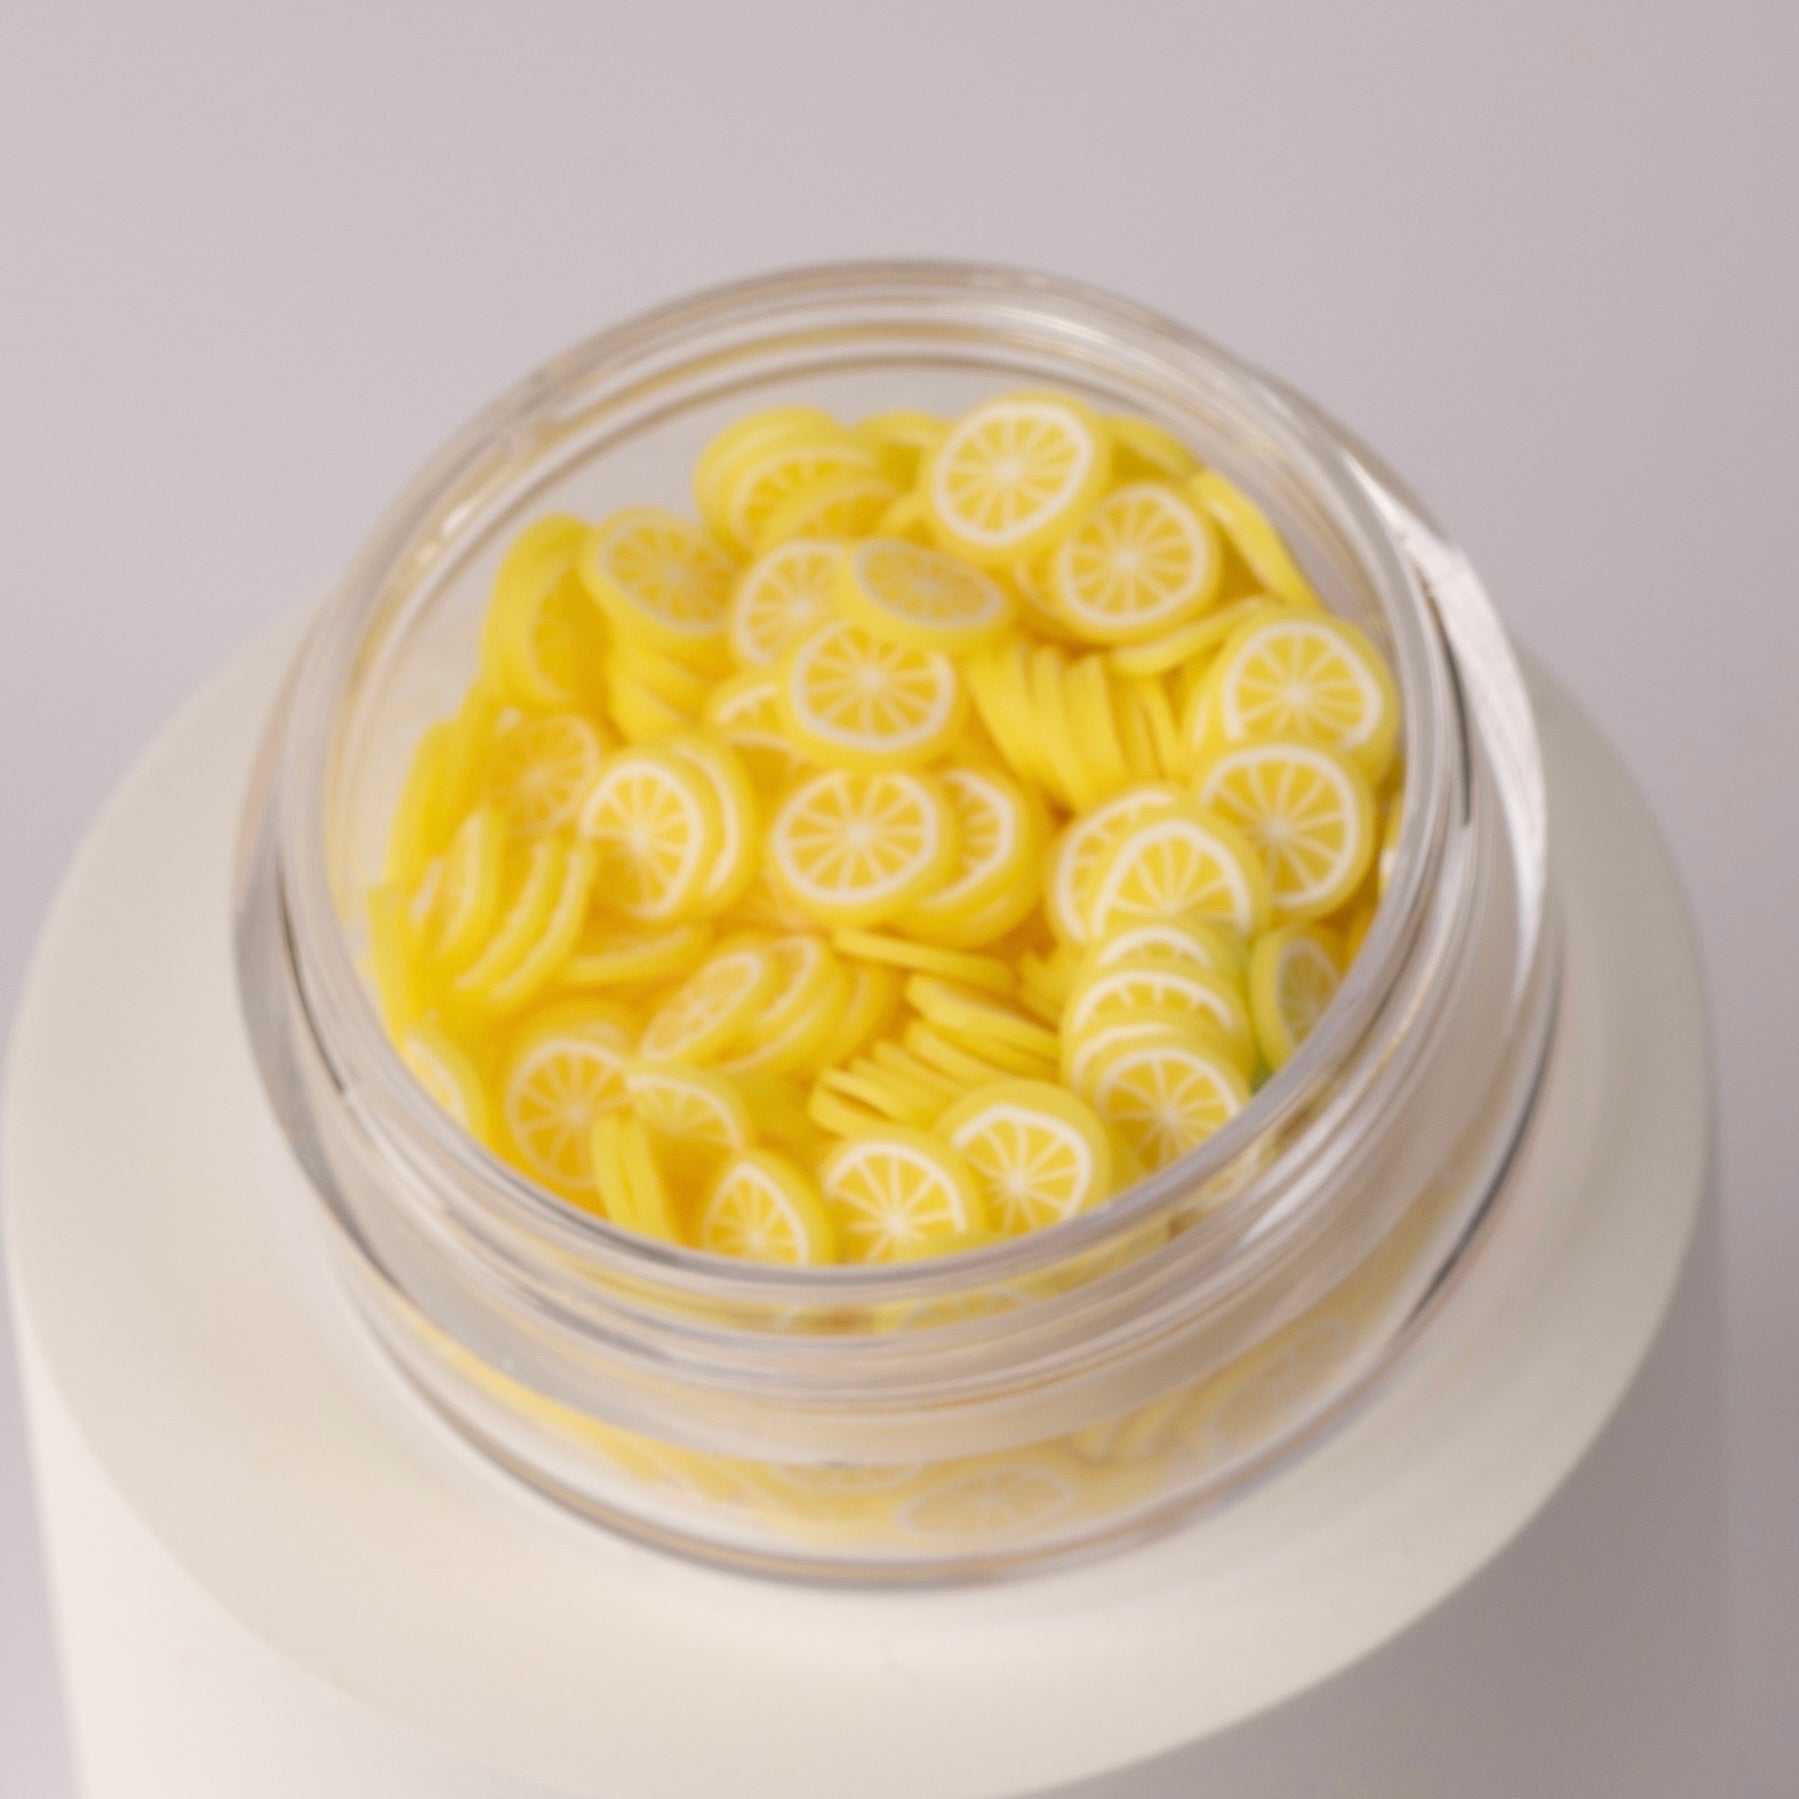 Mini lemon slices in clear jar on white background.